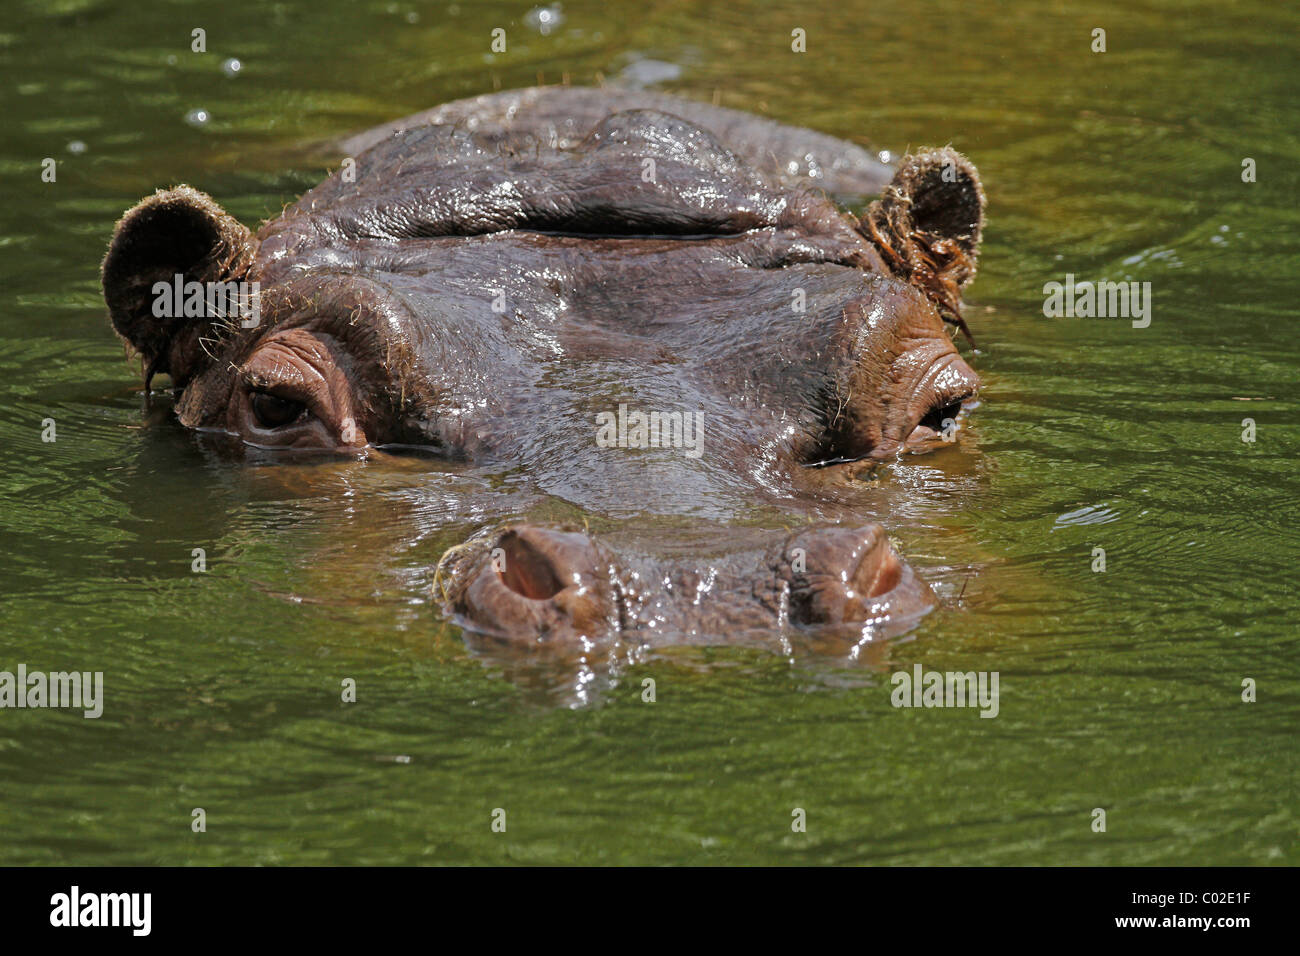 Hippopotamus (Hippopotamus amphibius) swimming in water Stock Photo